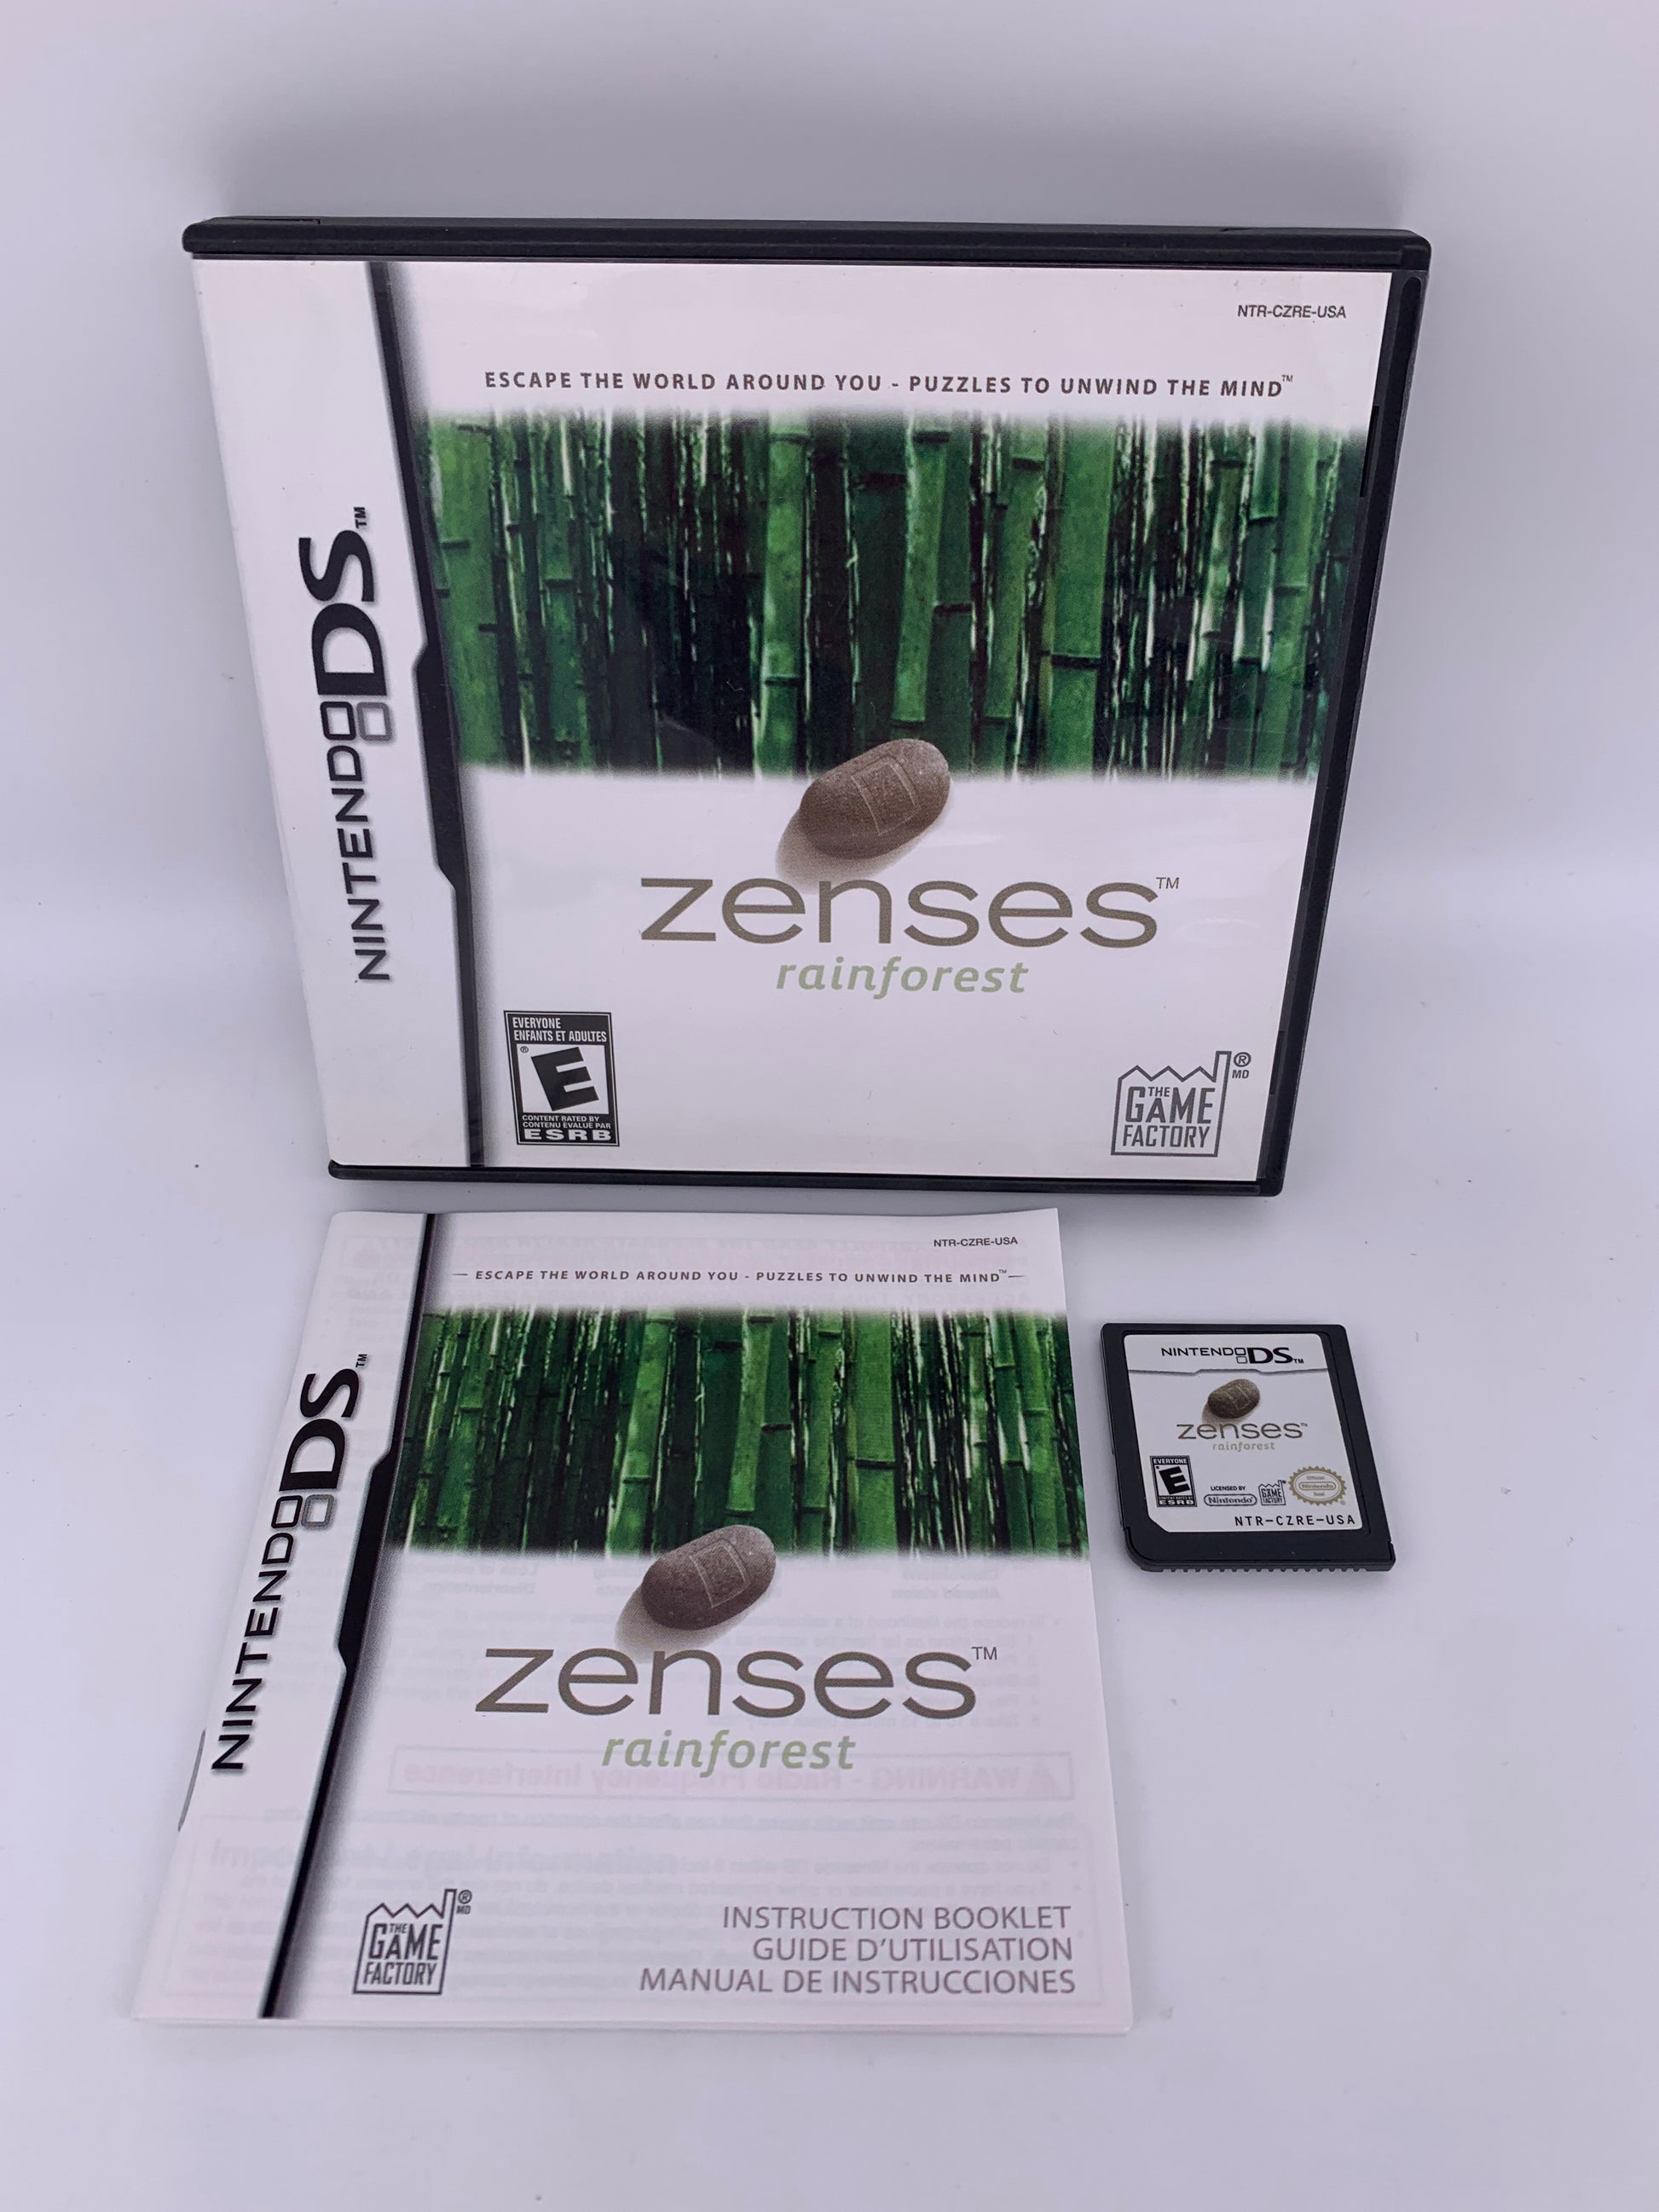 PiXEL-RETRO.COM : NINTENDO DS (DS) COMPLETE CIB BOX MANUAL GAME NTSC ZENSES RAINFOREST